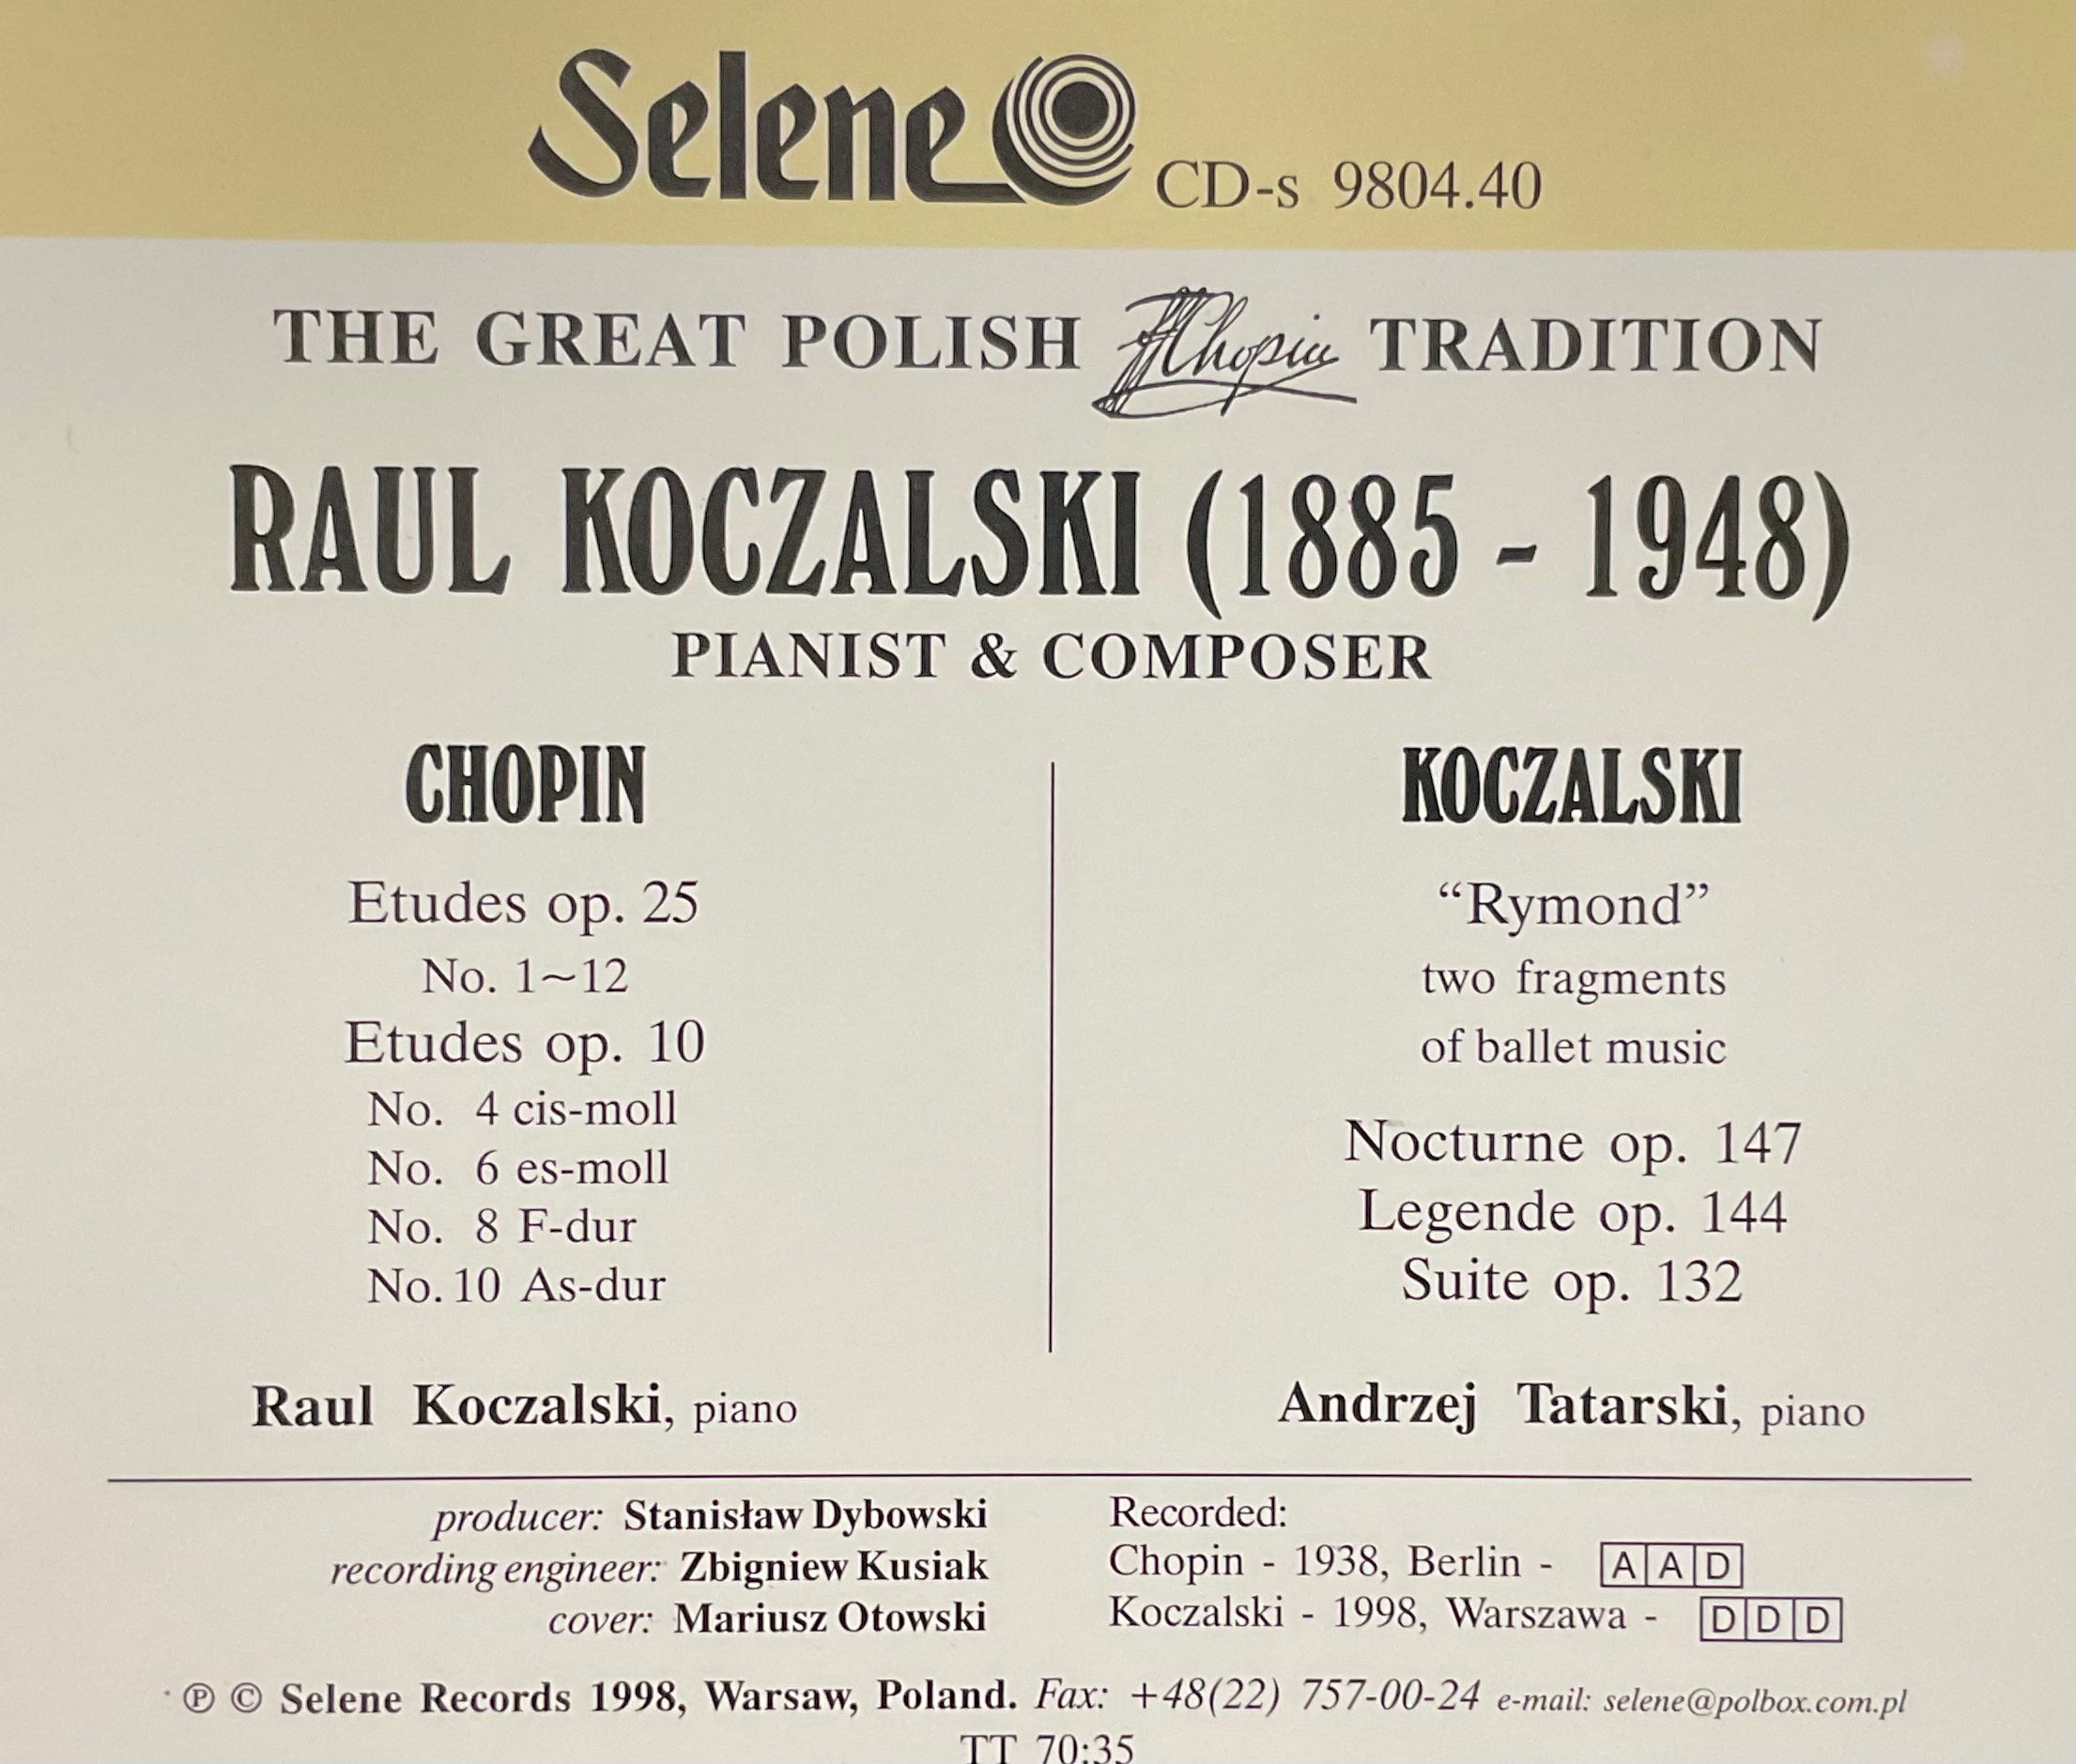 The Great Polish Chopin Tradition - Raul Koczalski vol III